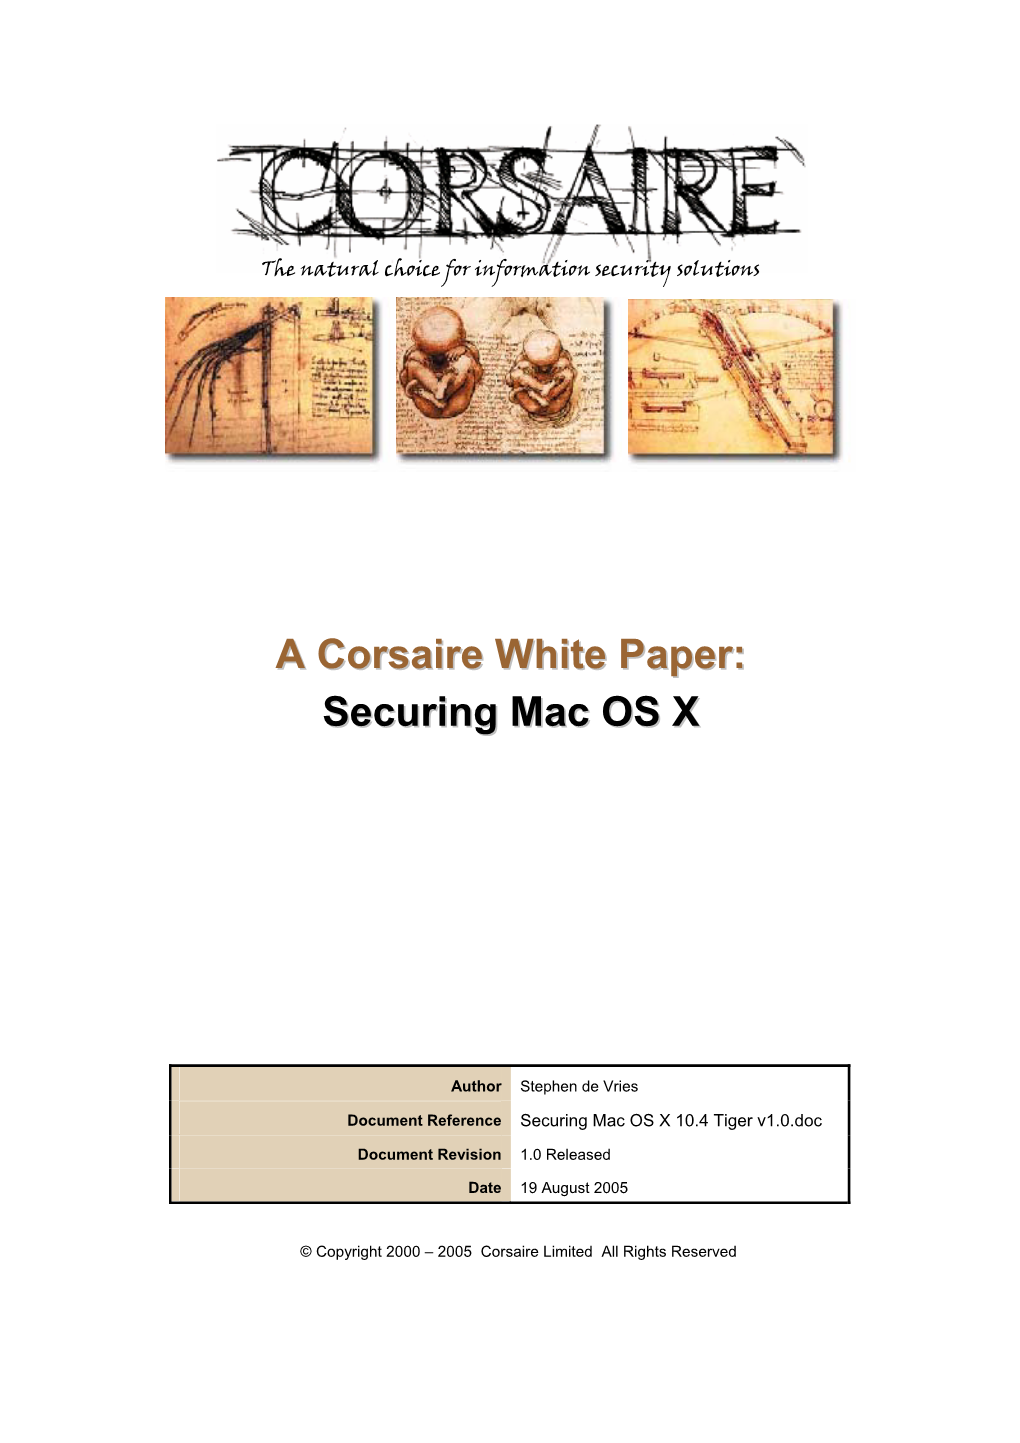 Securing Mac OS X 10.4 Tiger V1.0.Doc